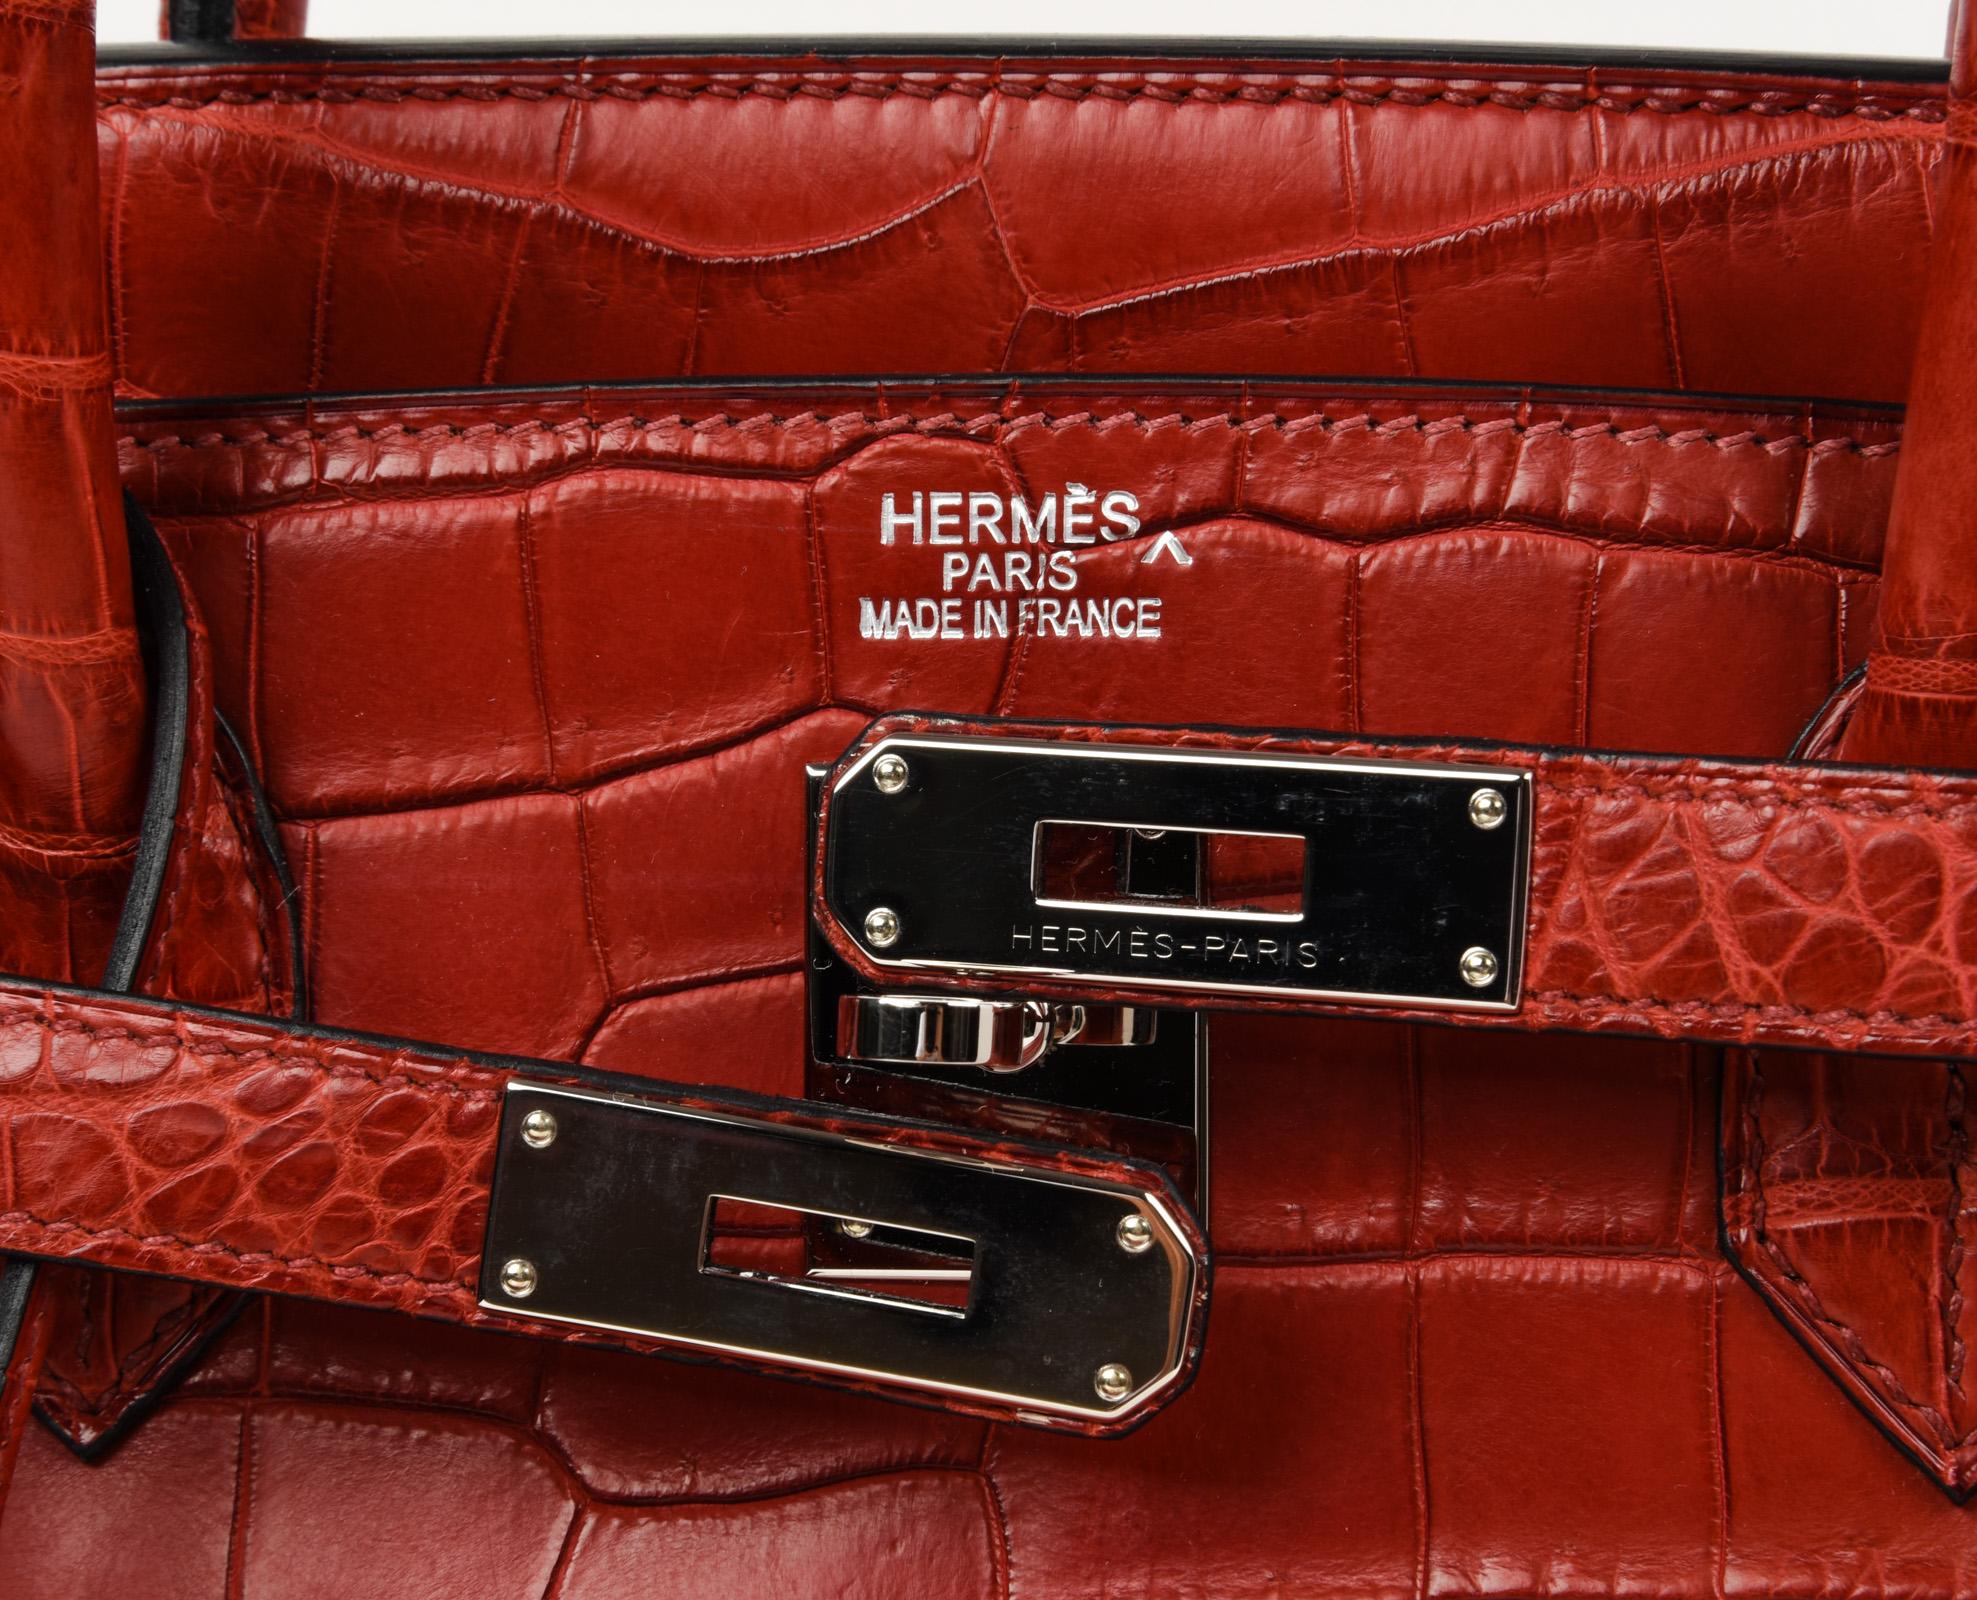 Hermès 'Birkin' Bag 40cm in Shiny Brown Porosus Crocodile - Hermès